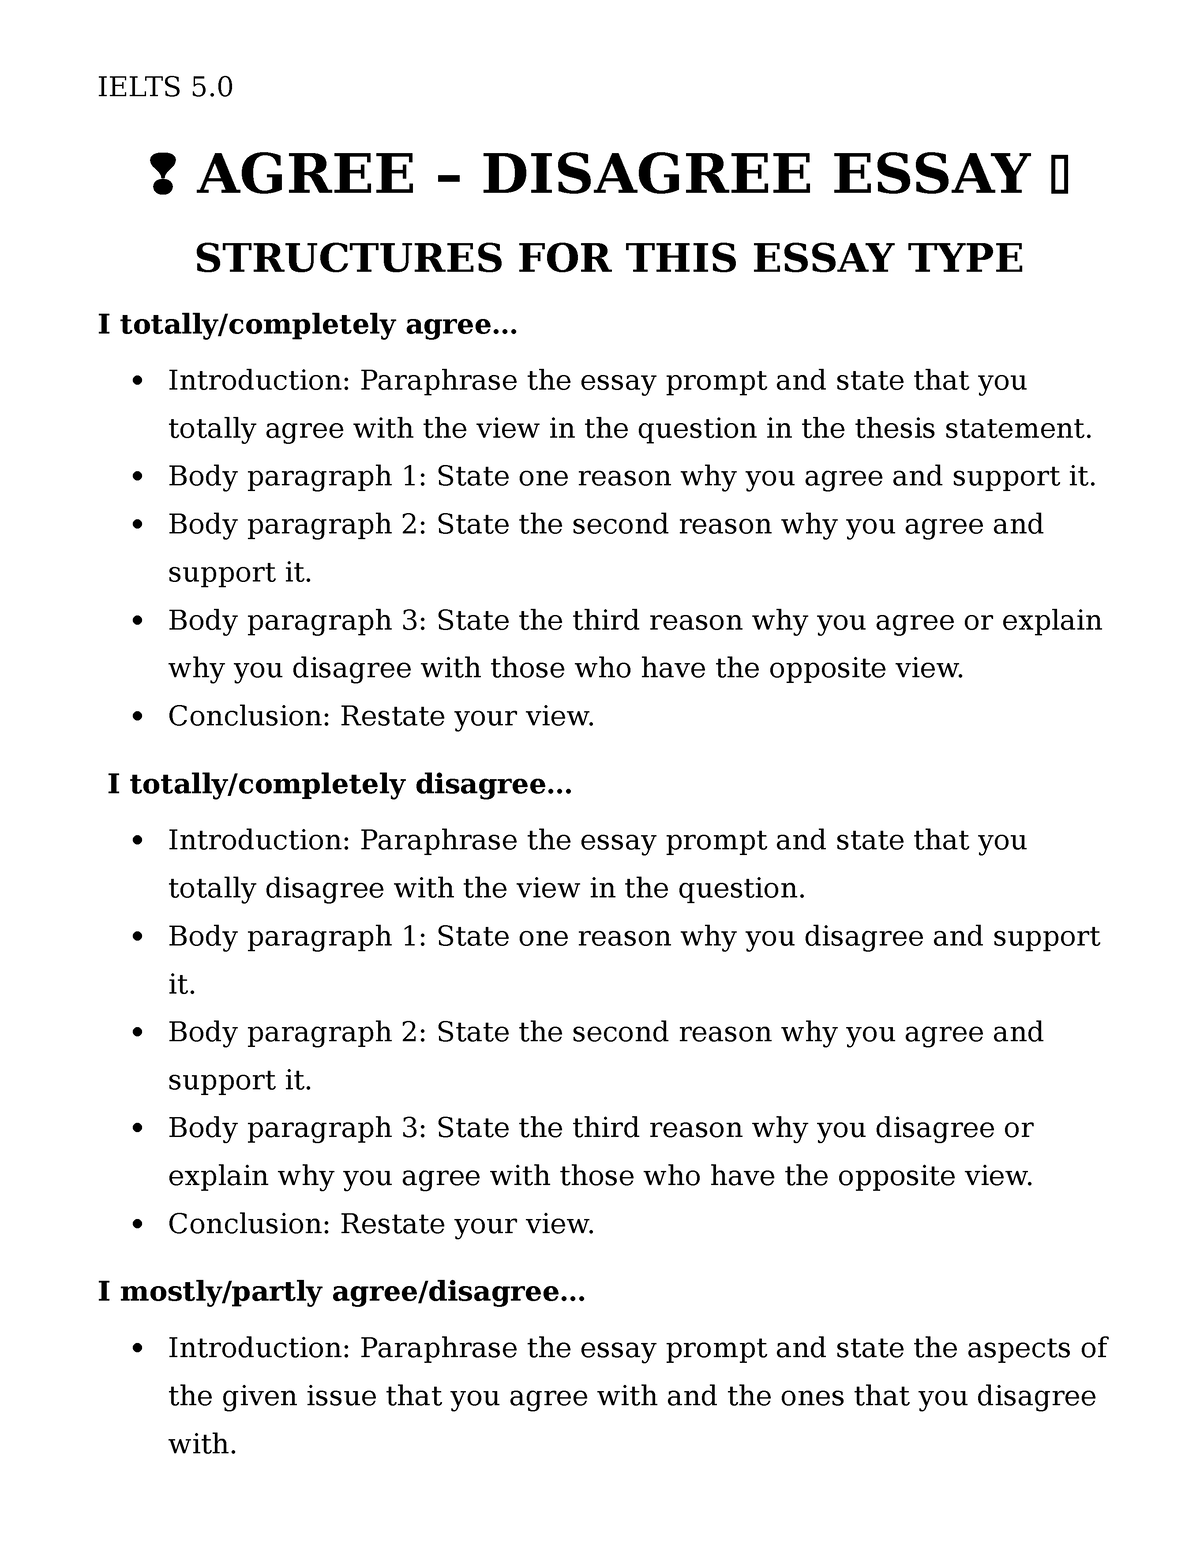 agree disagree essay topics writing 9